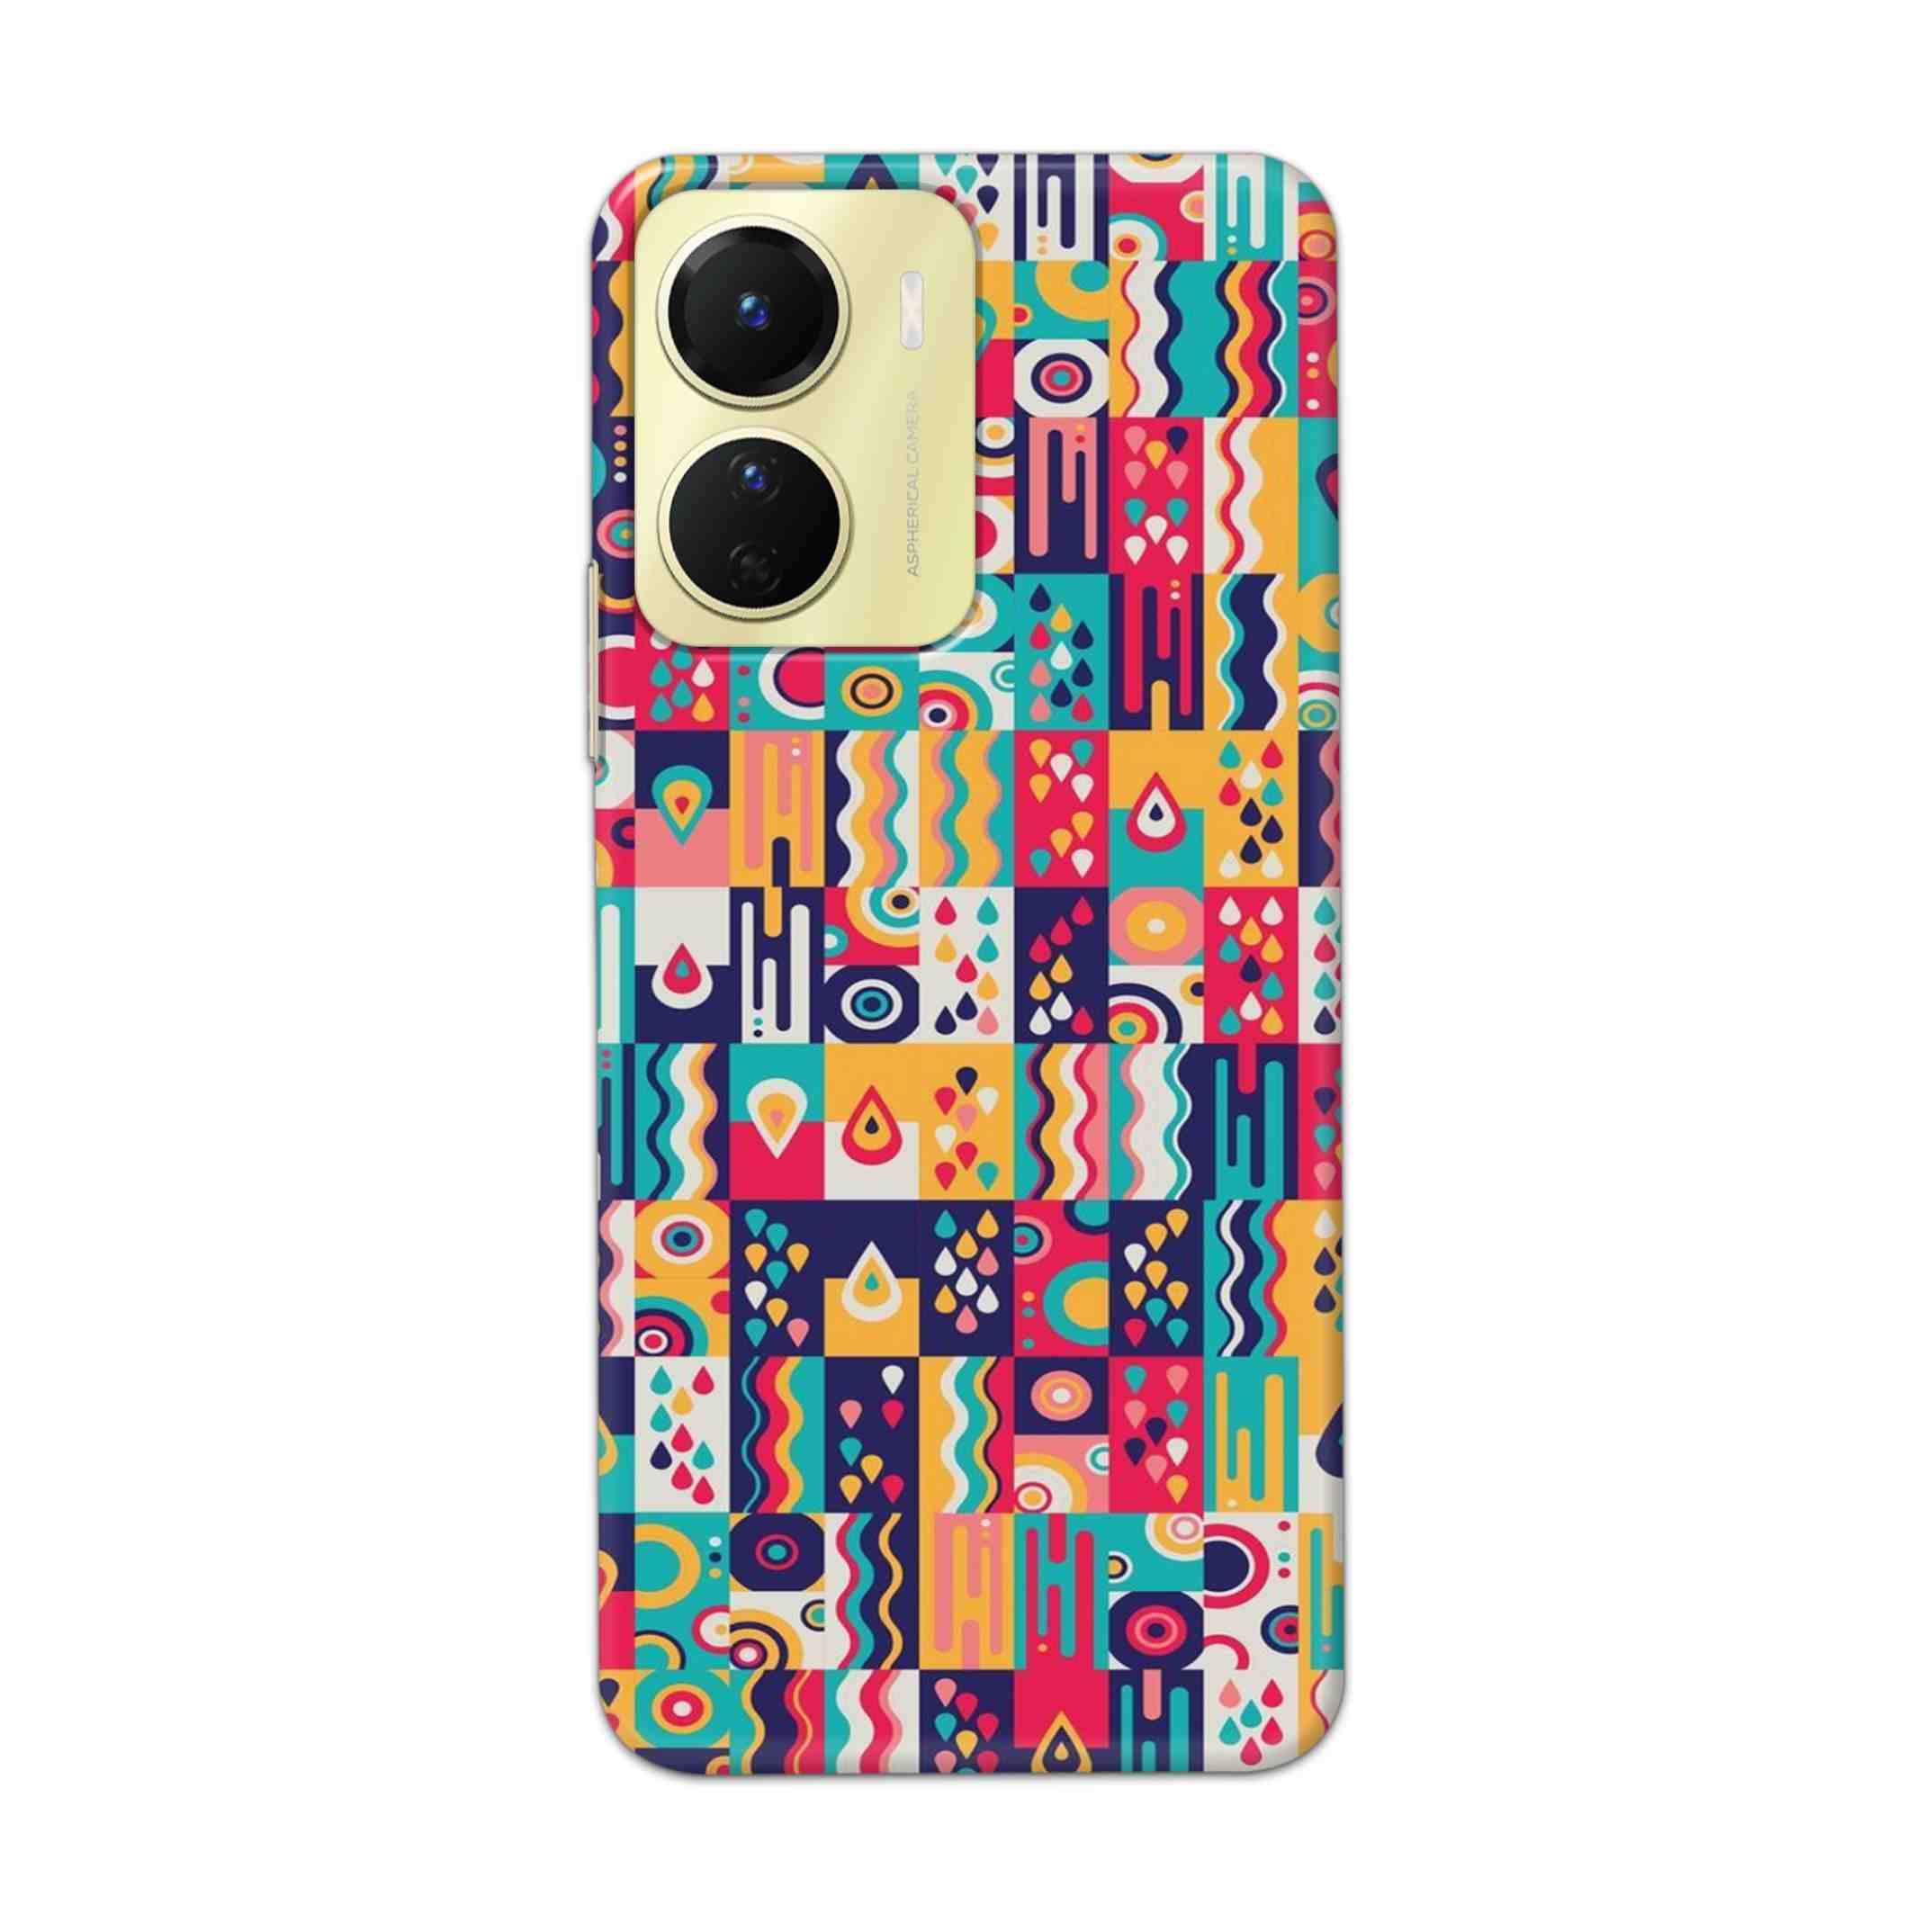 Buy Art Hard Back Mobile Phone Case Cover For Vivo Y16 Online